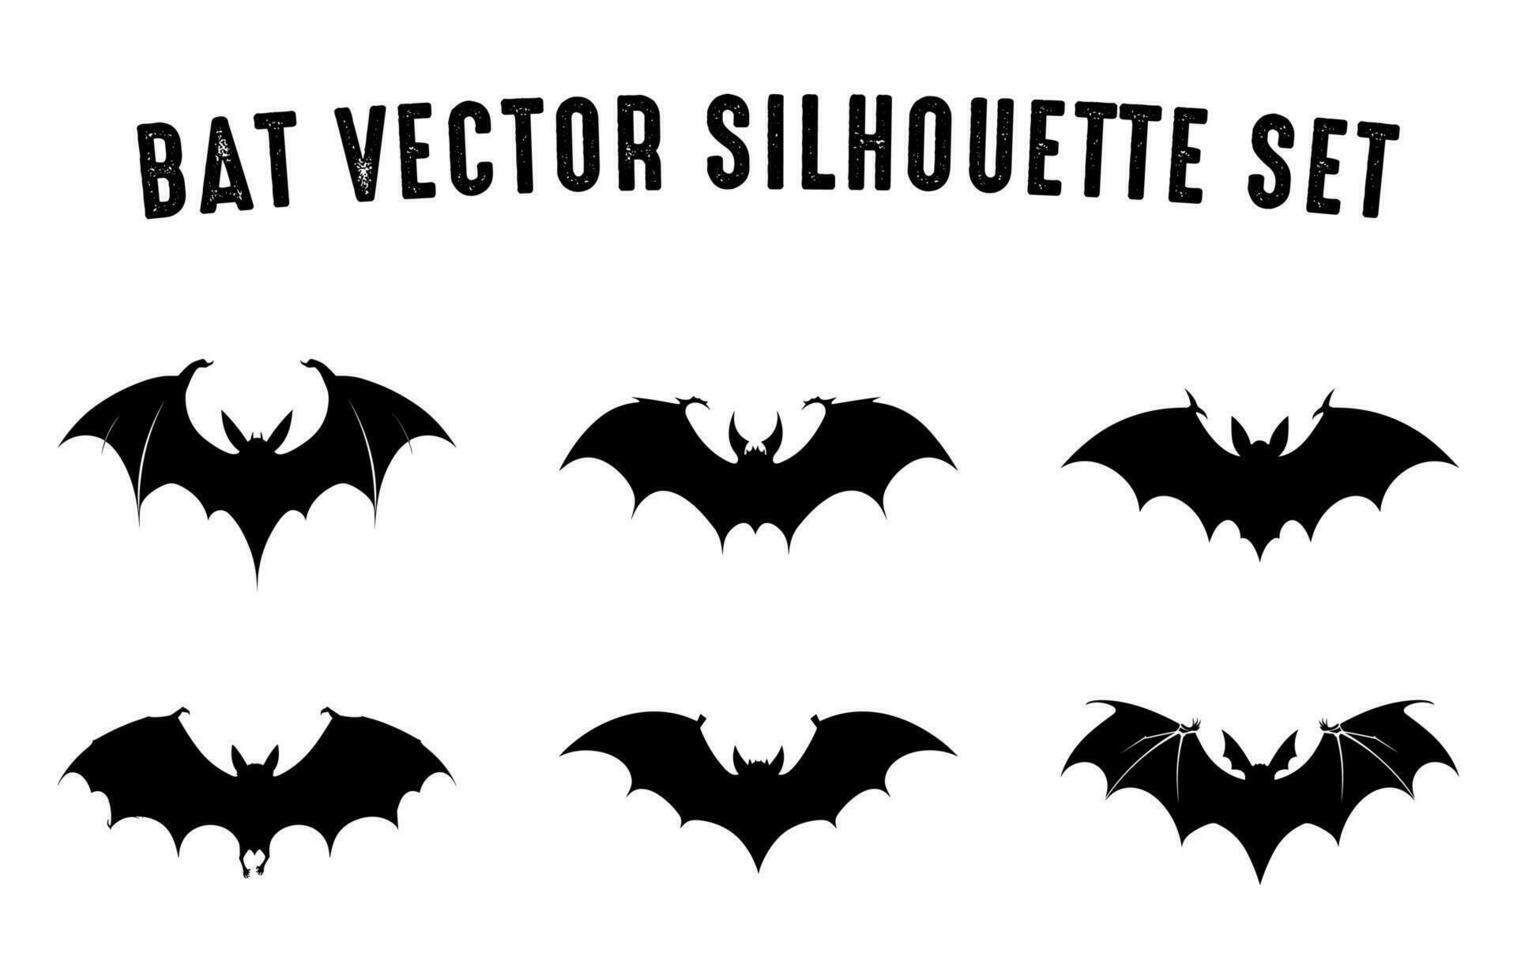 Bat silhouettes set on white background, Black silhouettes of bat vector, Flying Bat silhouettes Halloween symbols vector